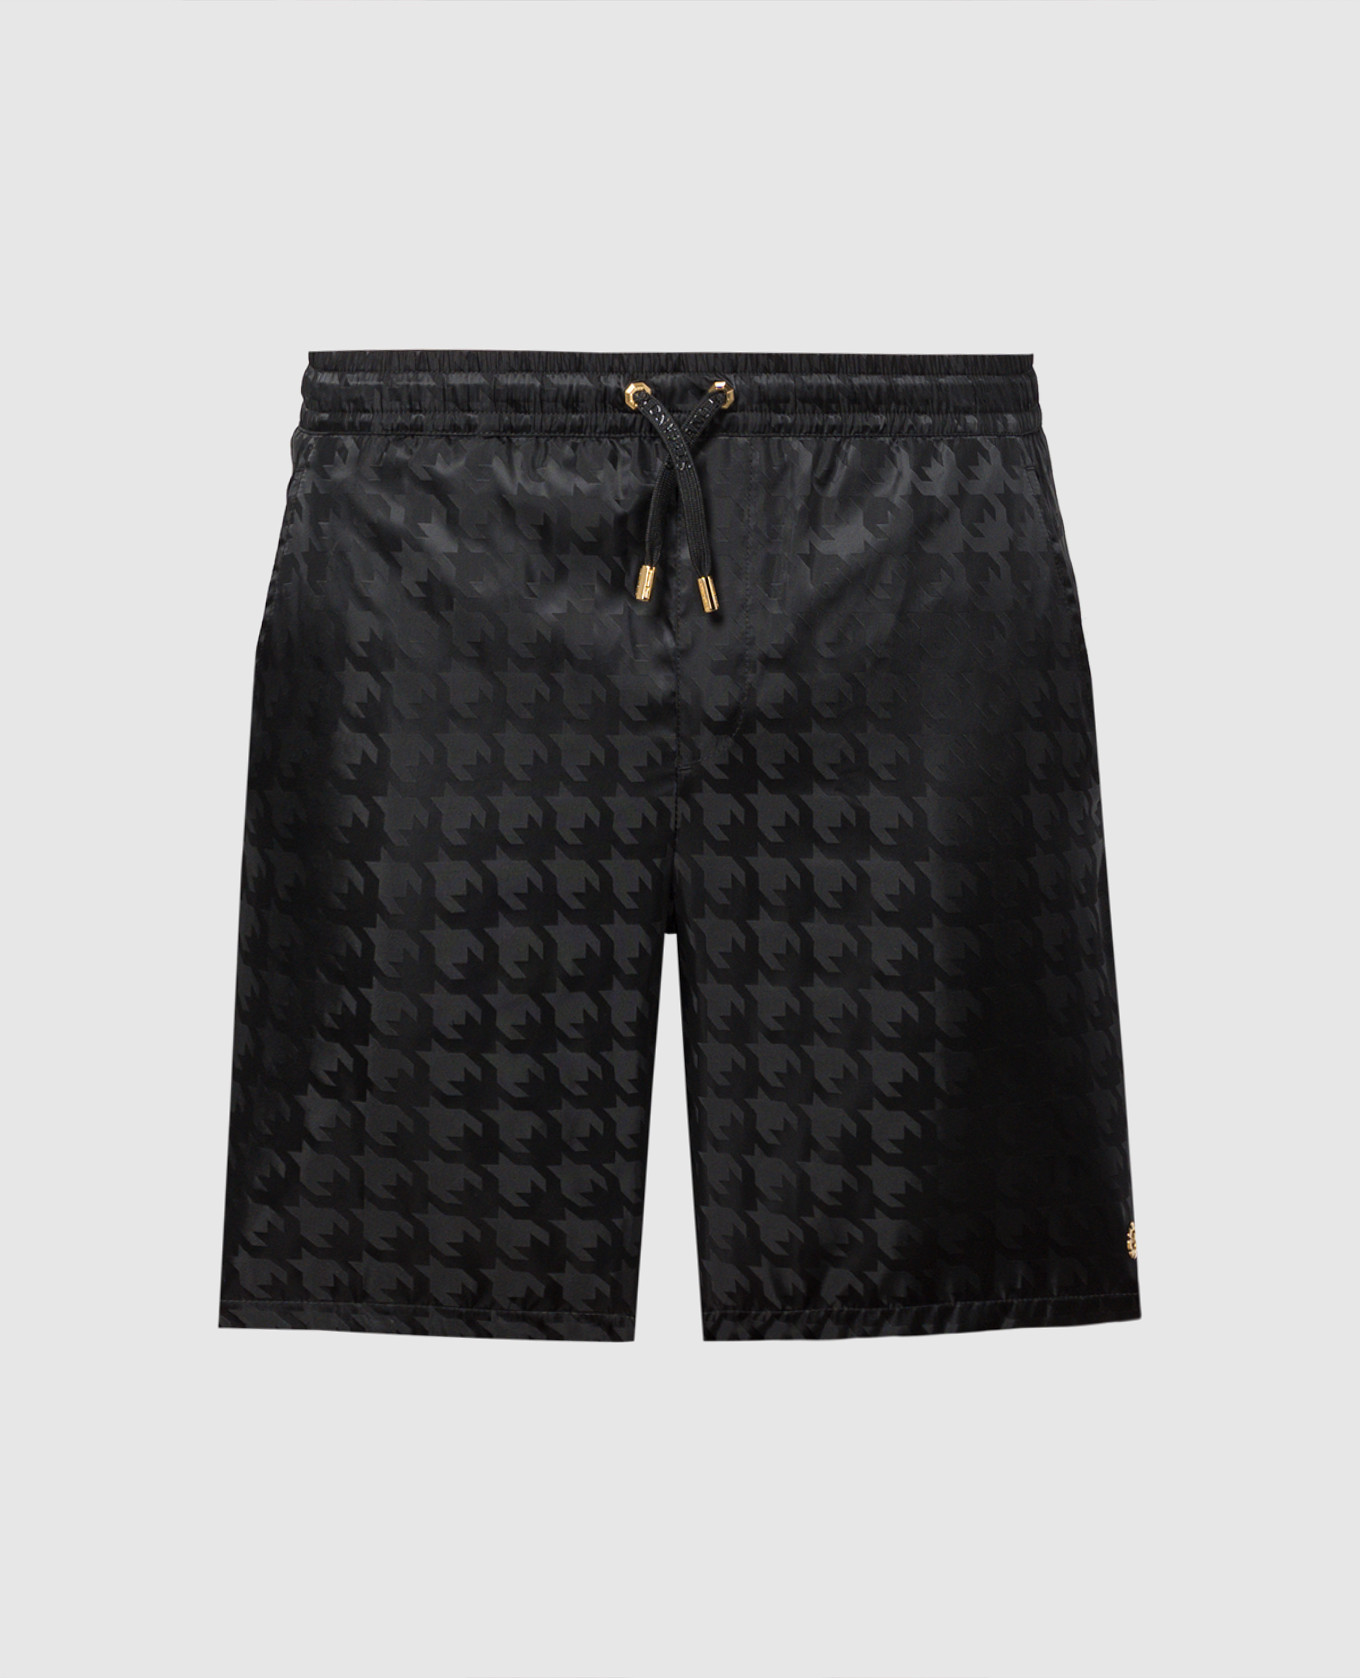 Black patterned swim shorts